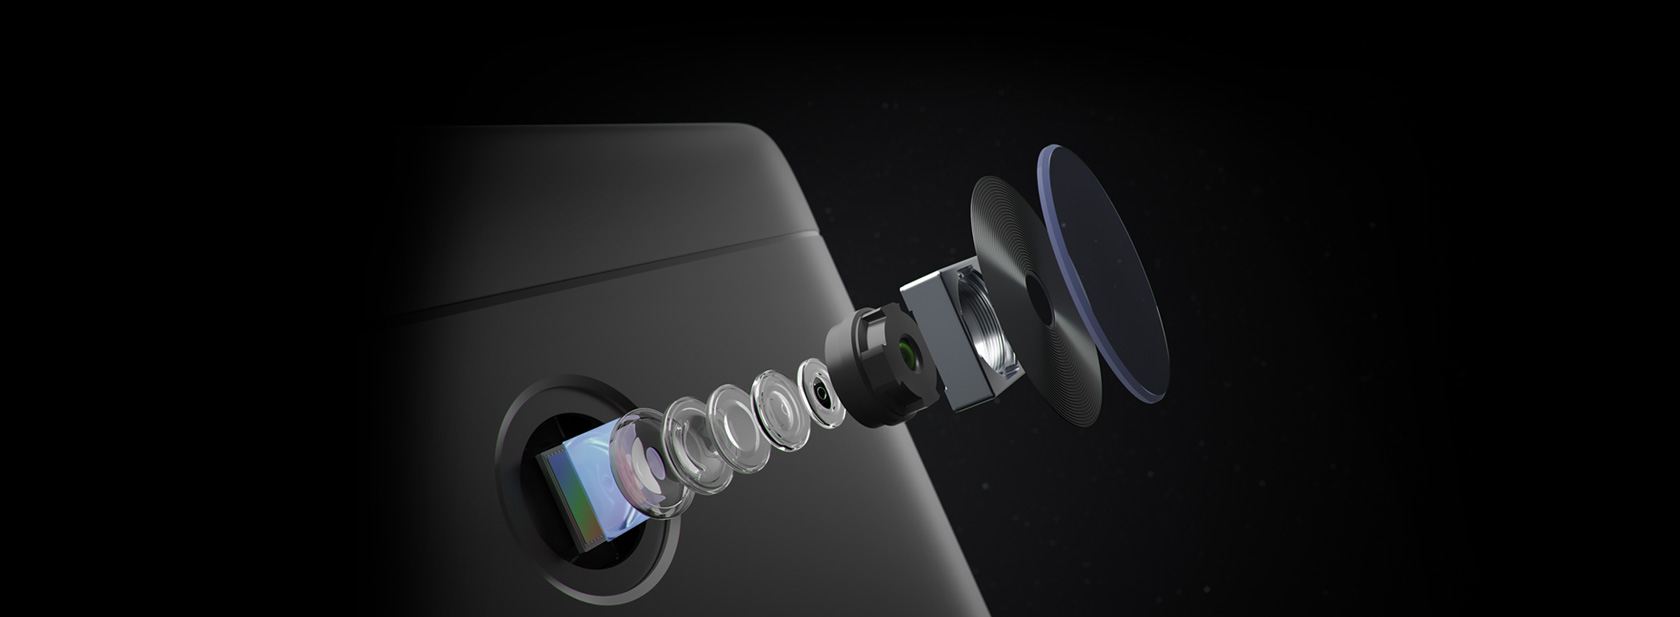 Thiết kế camera sau trên Redmi Note 4 2017